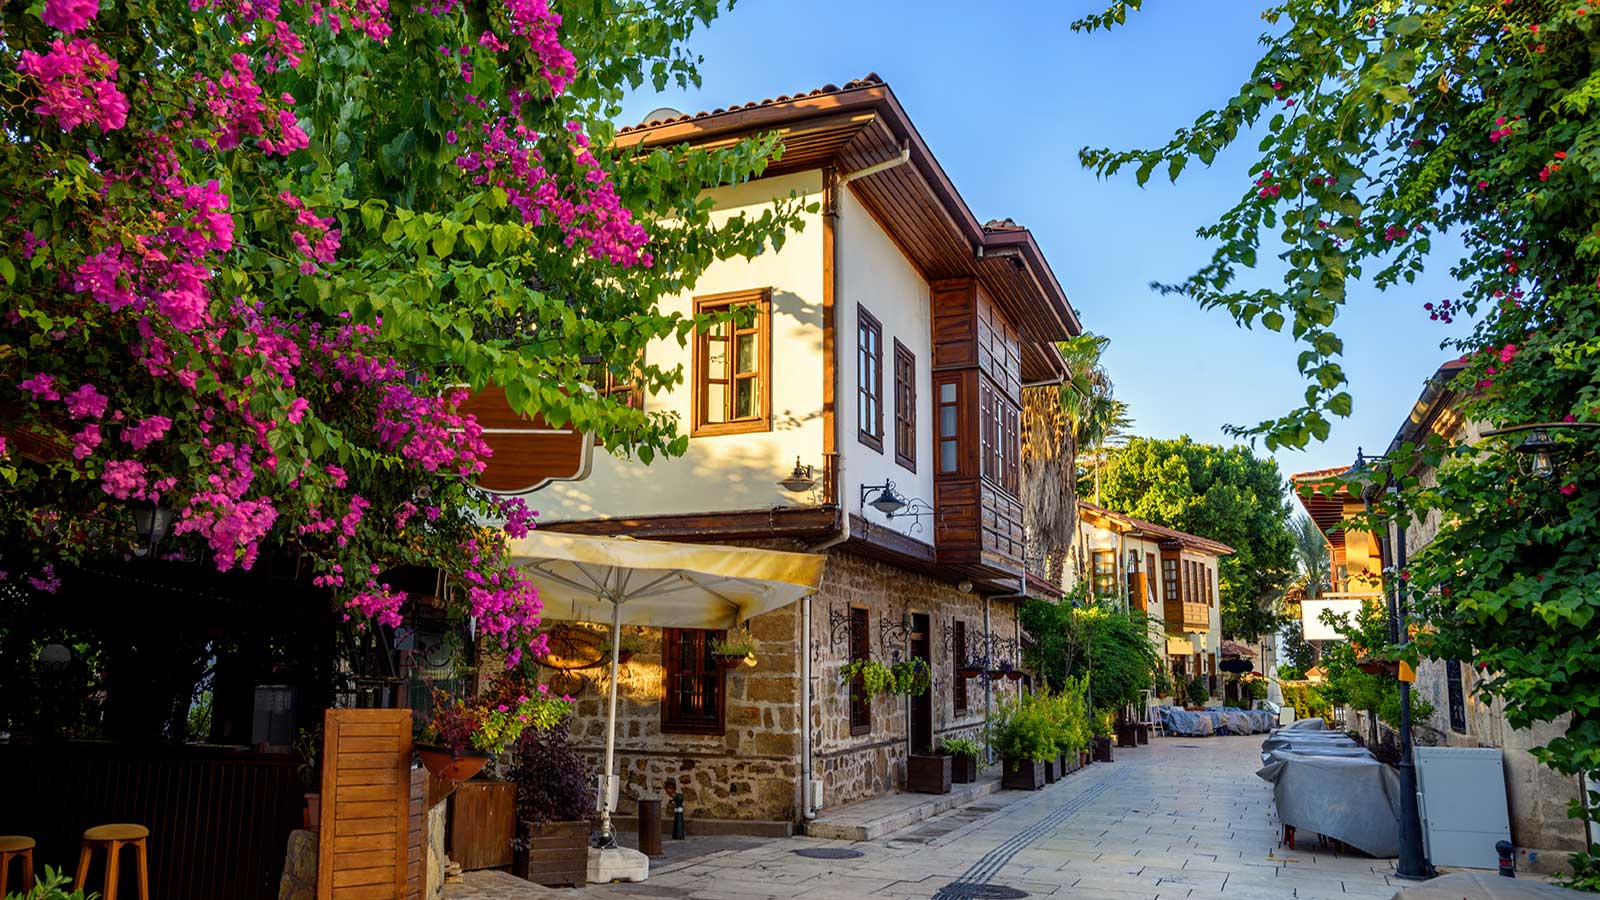 Tarihten gelen zenginlik: Antalya